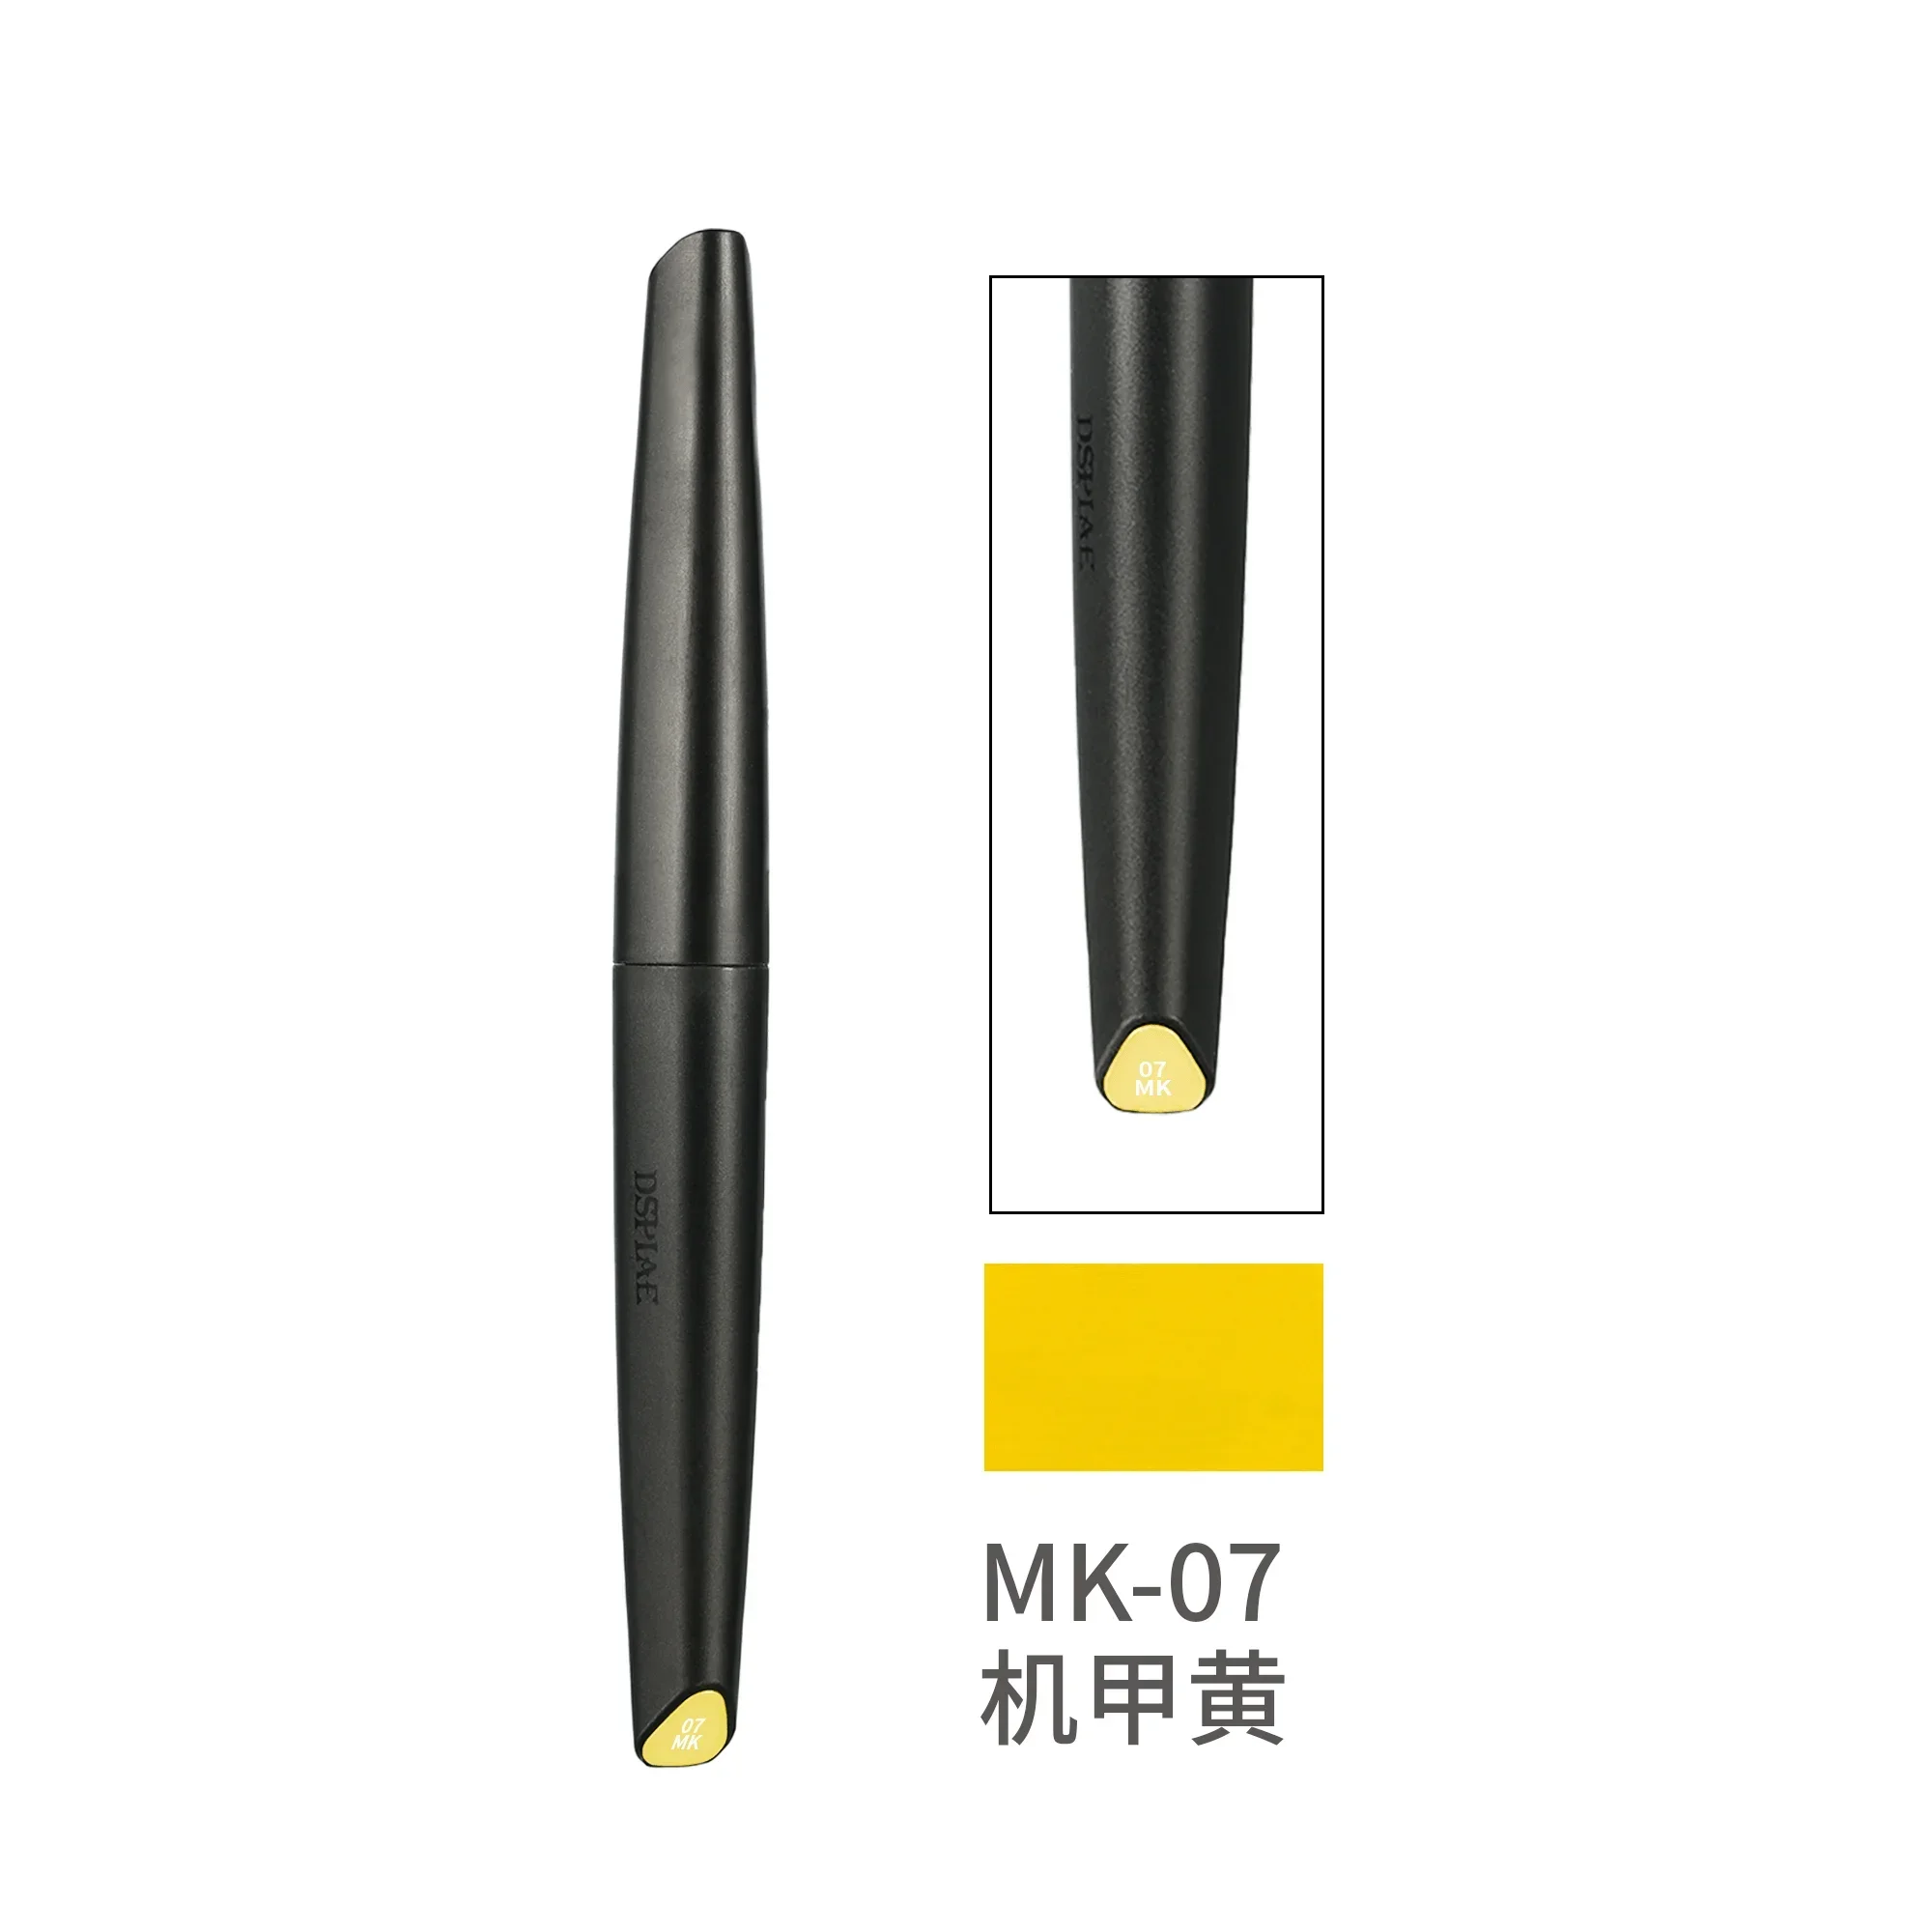 Dspae-Mk قلم فرشاة ، رأس ناعم قائم على الماء ، قاعدة ماركر ، أصفر ، أخضر ، وردي ، أزرق ، برتقالي ، صديق للبيئة ، 12 قطعة